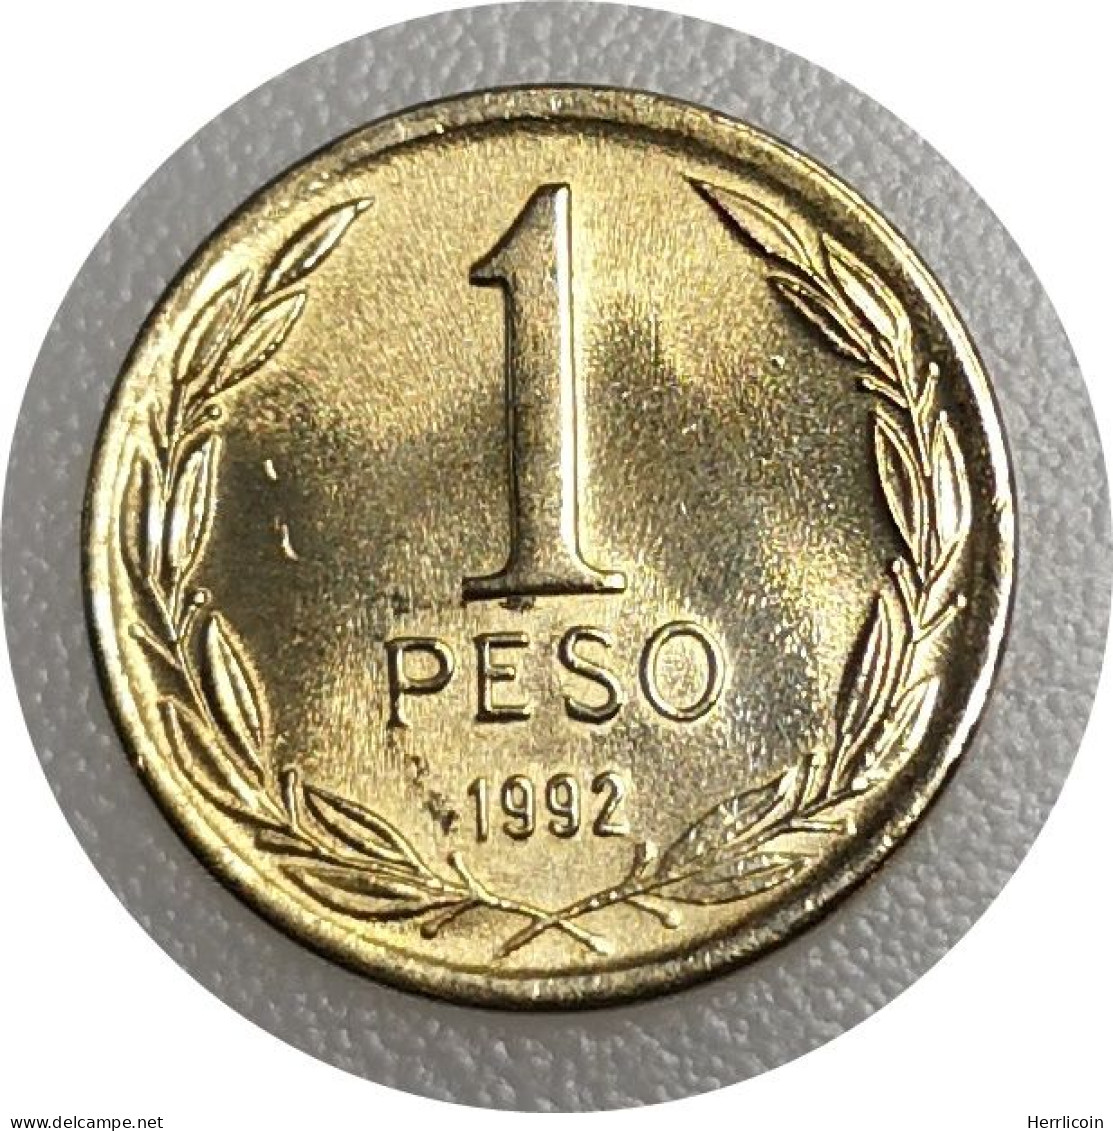 Monnaie Chili - 1992 - 1 Peso - Cile